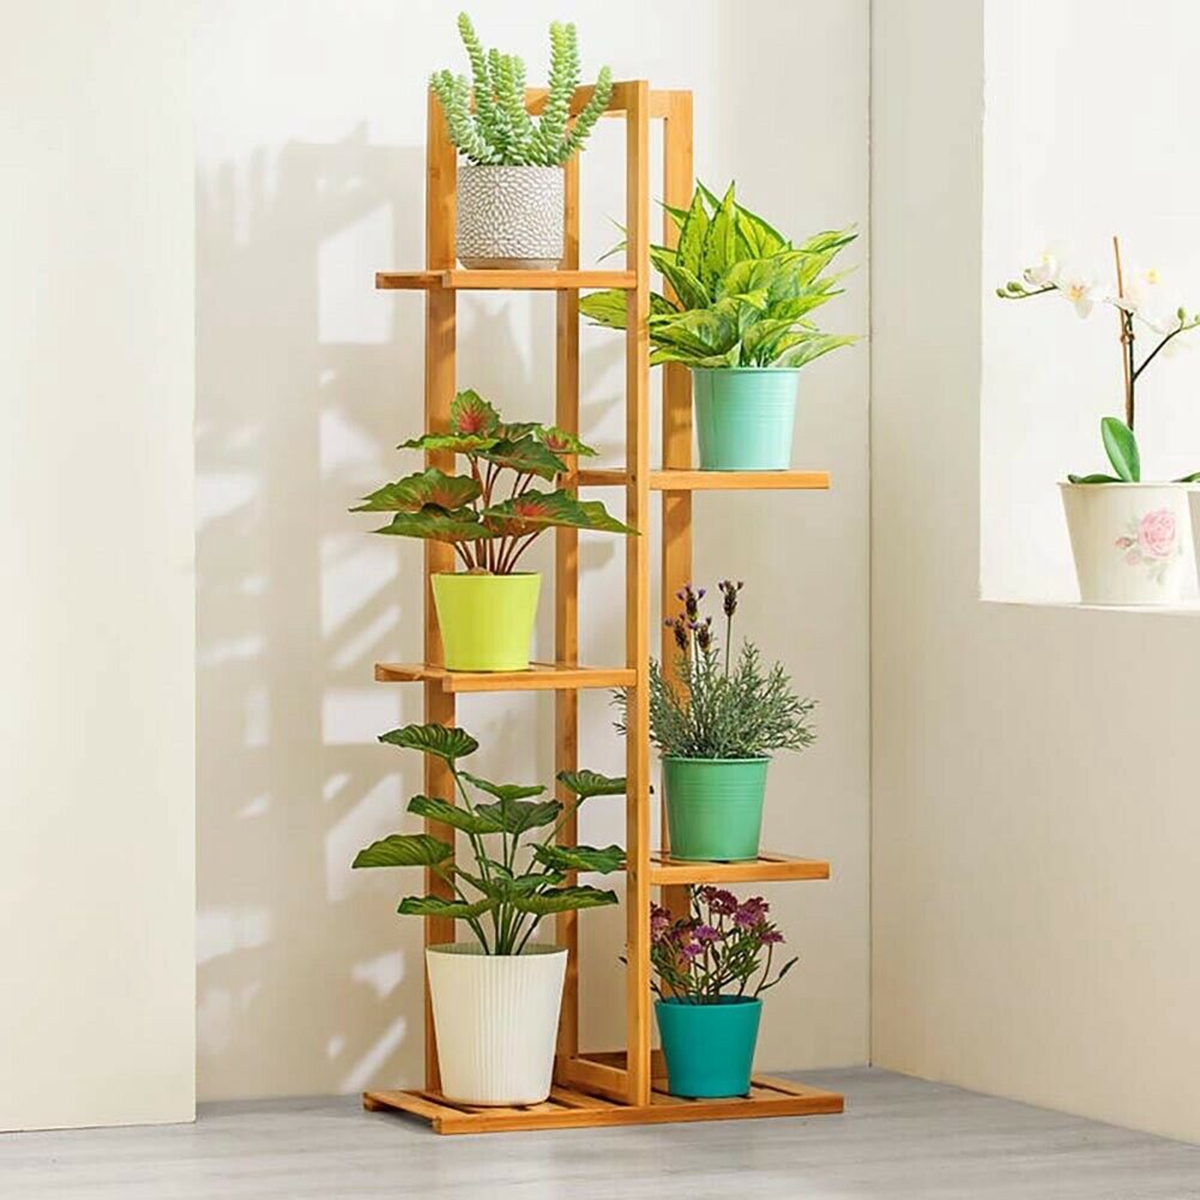 Plant-Flower-Garden-Display-Holder-Stand-Pot-Storage-Rack-Indoor-Outdoor-Decor-1835858-5